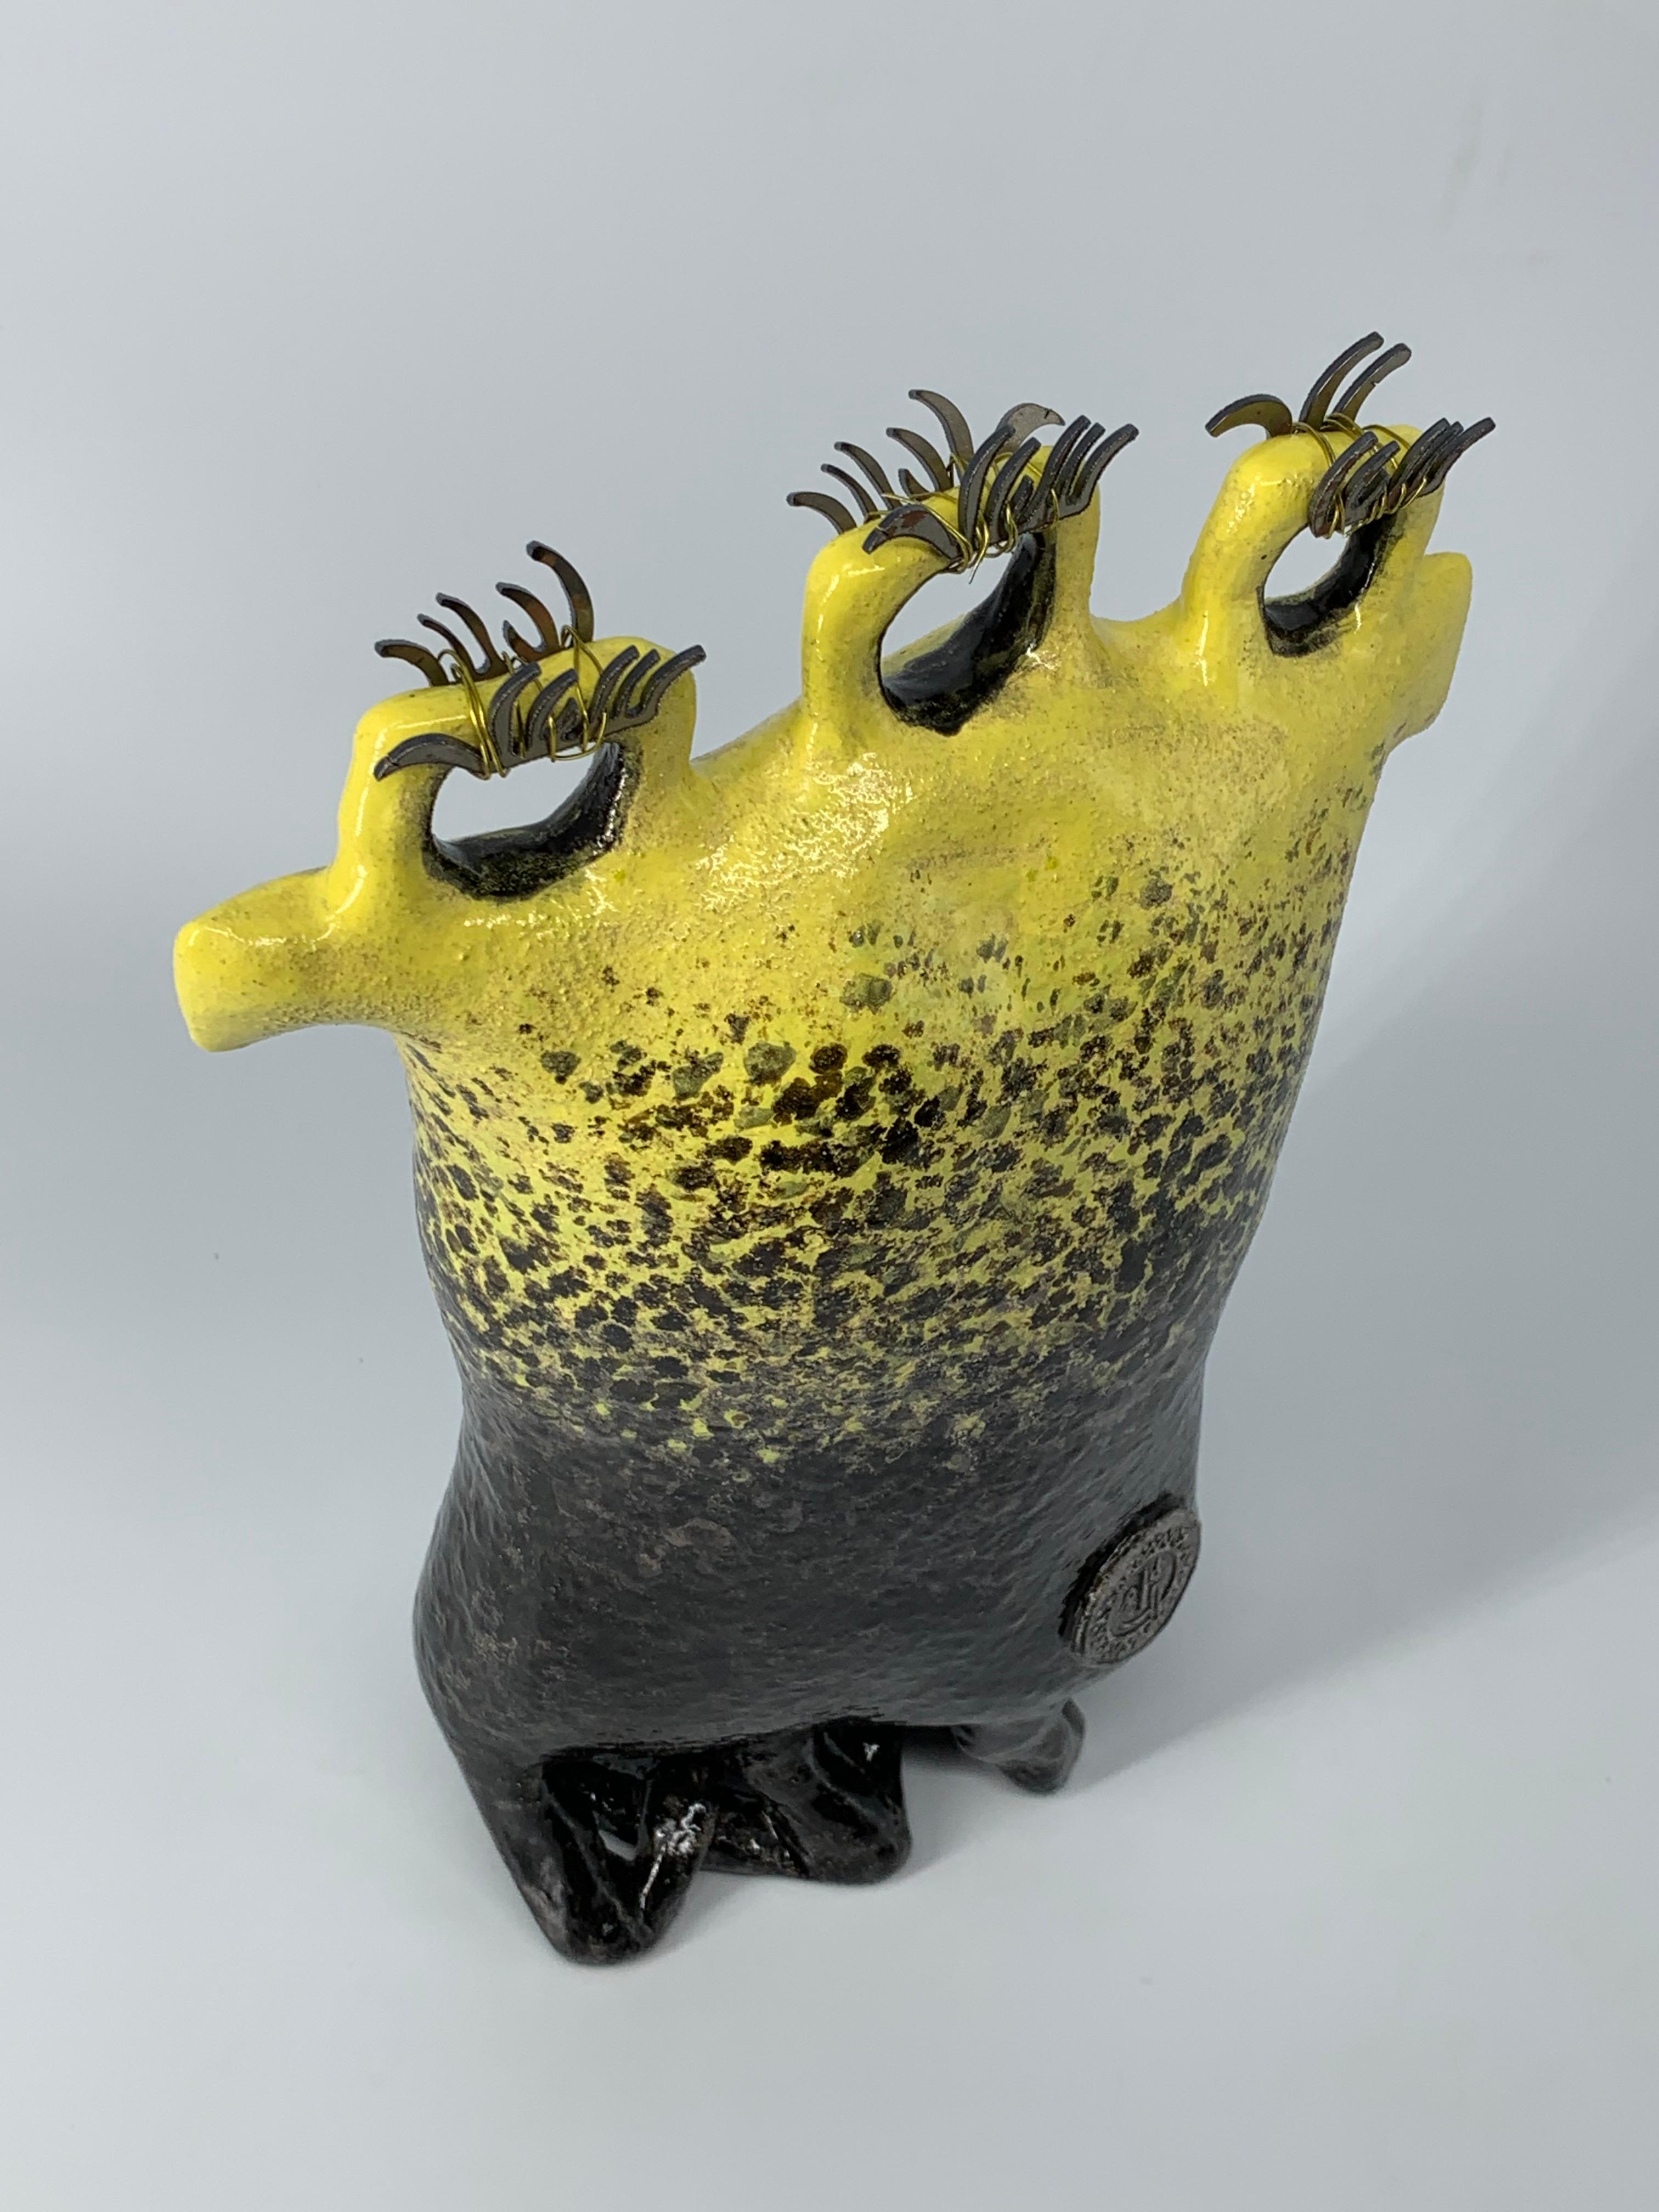 Yellow creature - Abstract Sculpture by Olesia Dvorak-Galik